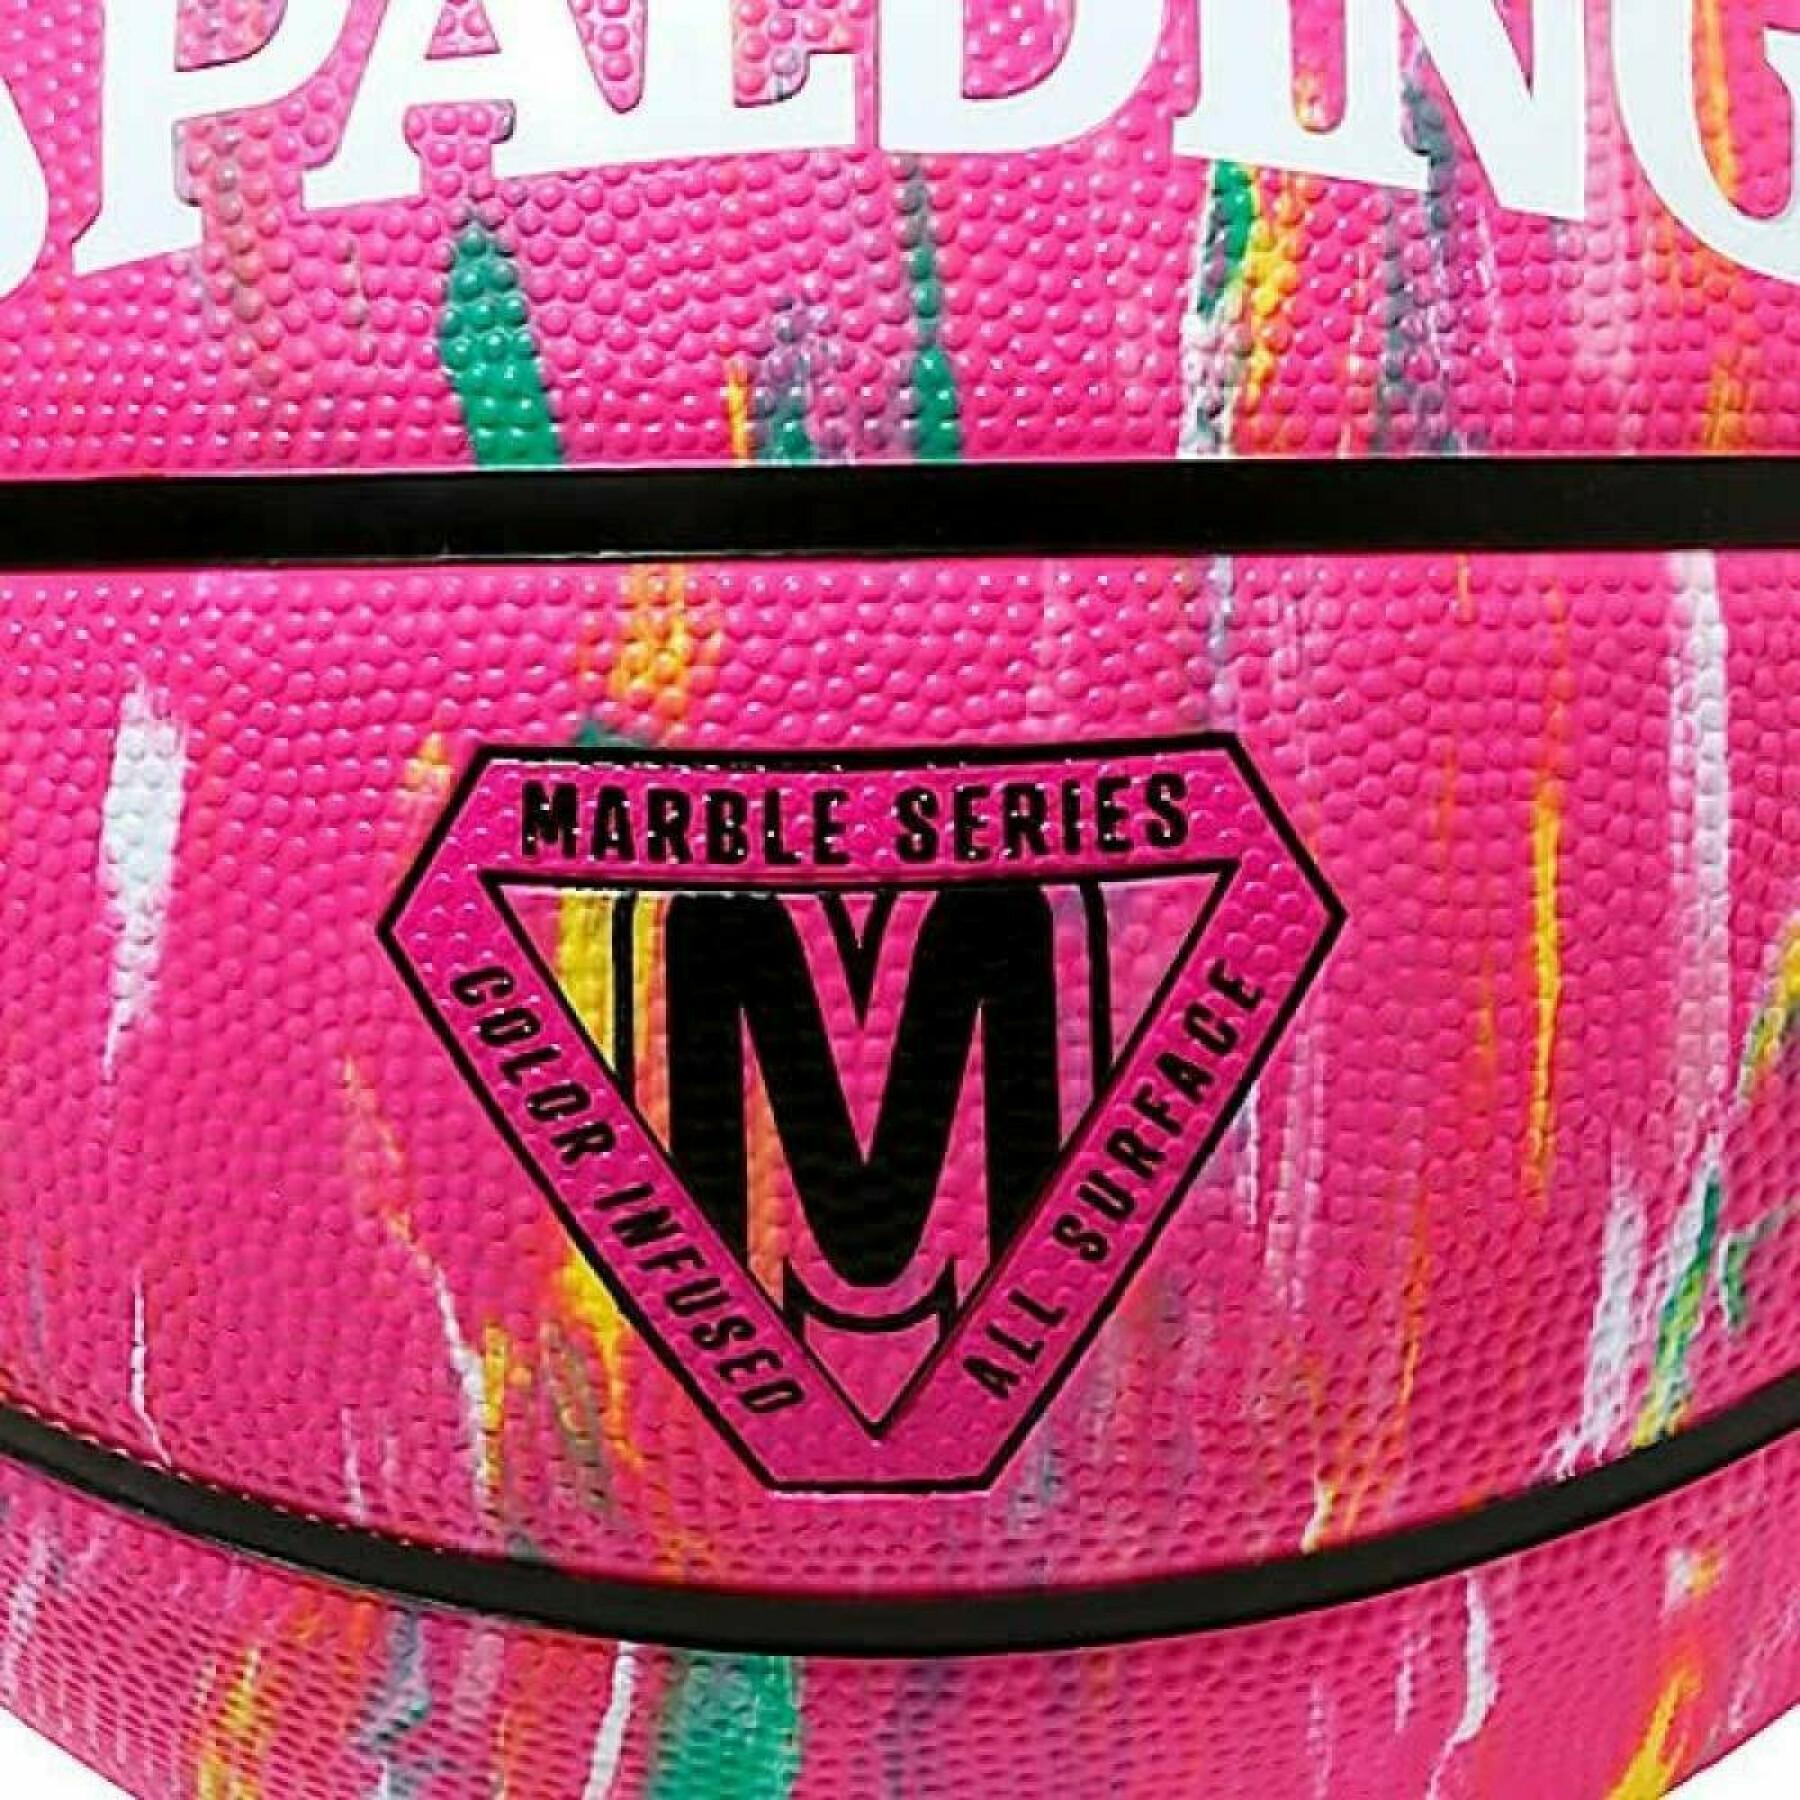 Basketball Spalding Marble Series